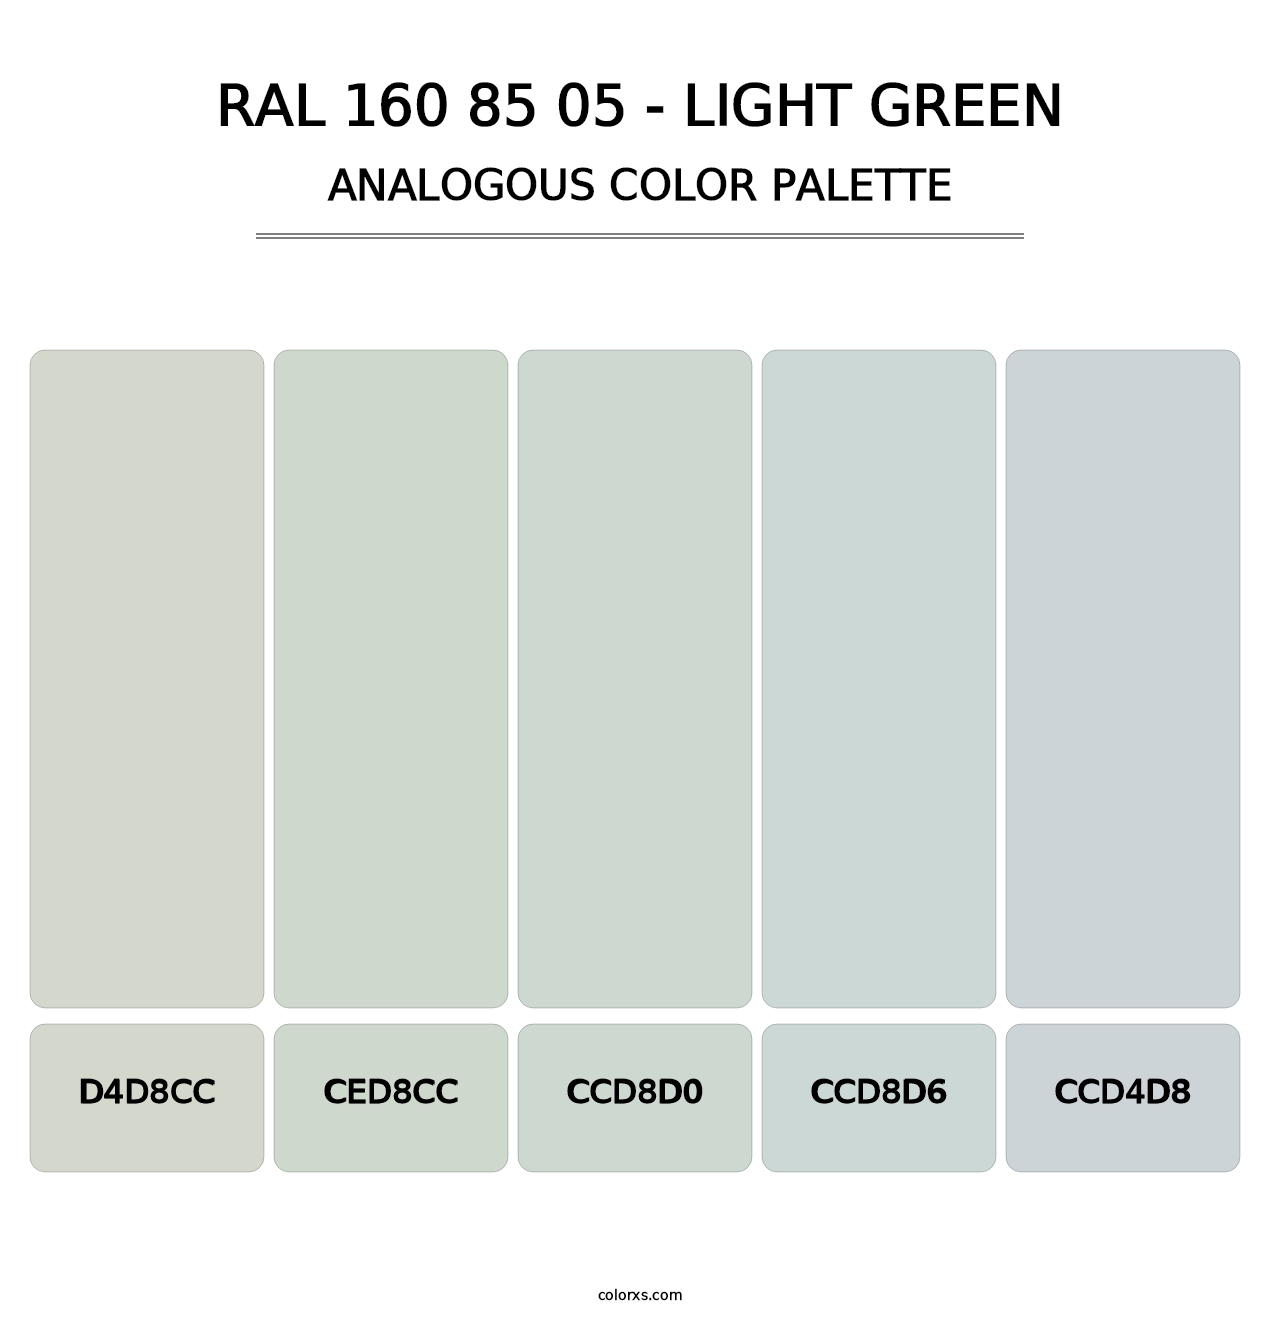 RAL 160 85 05 - Light Green - Analogous Color Palette